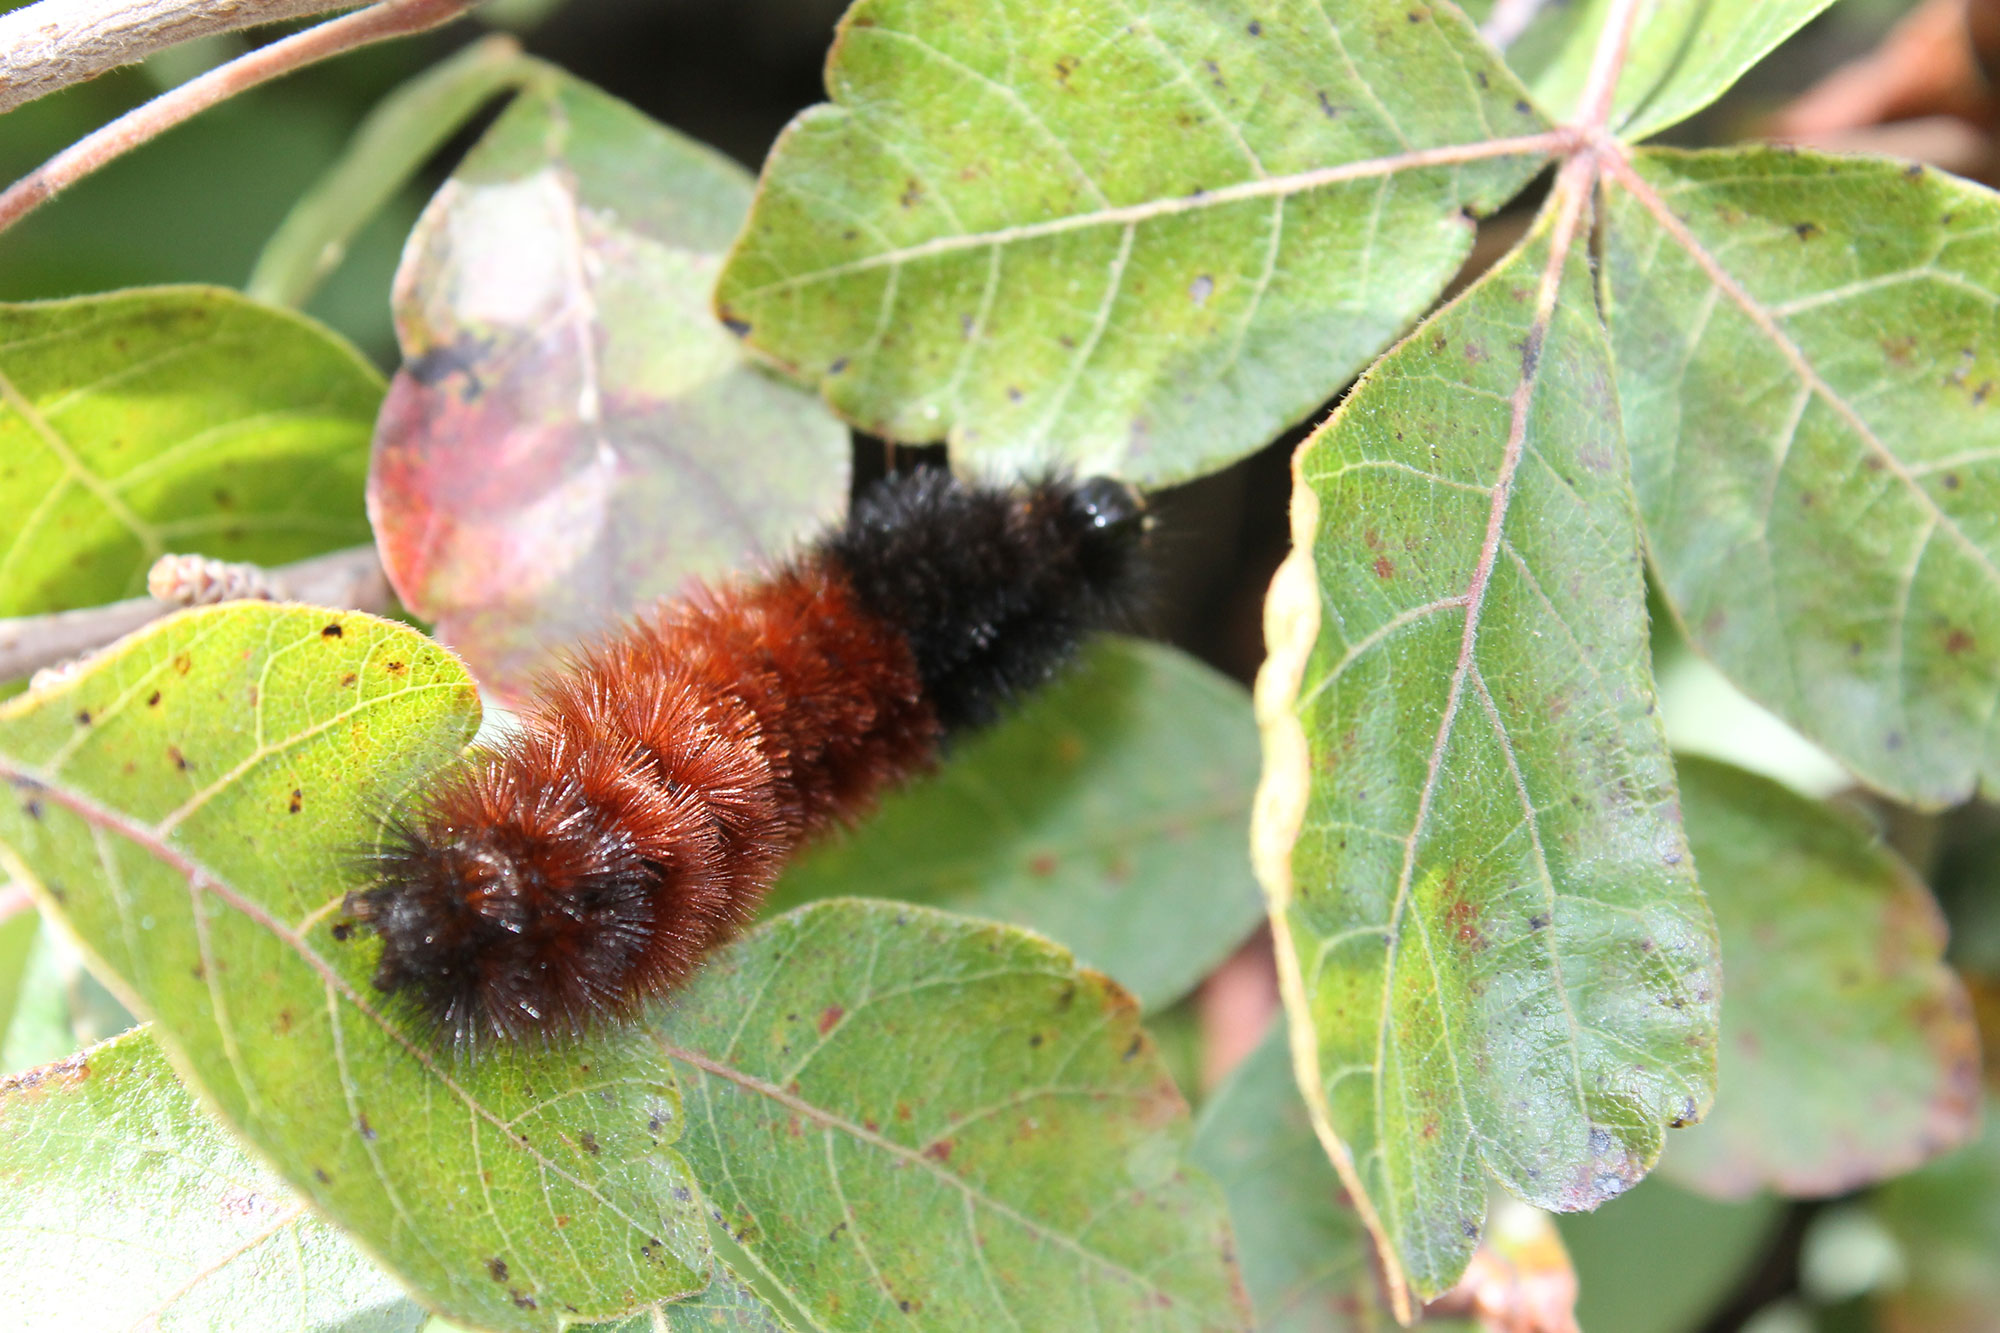 A woolly bear caterpillar on a leaf.